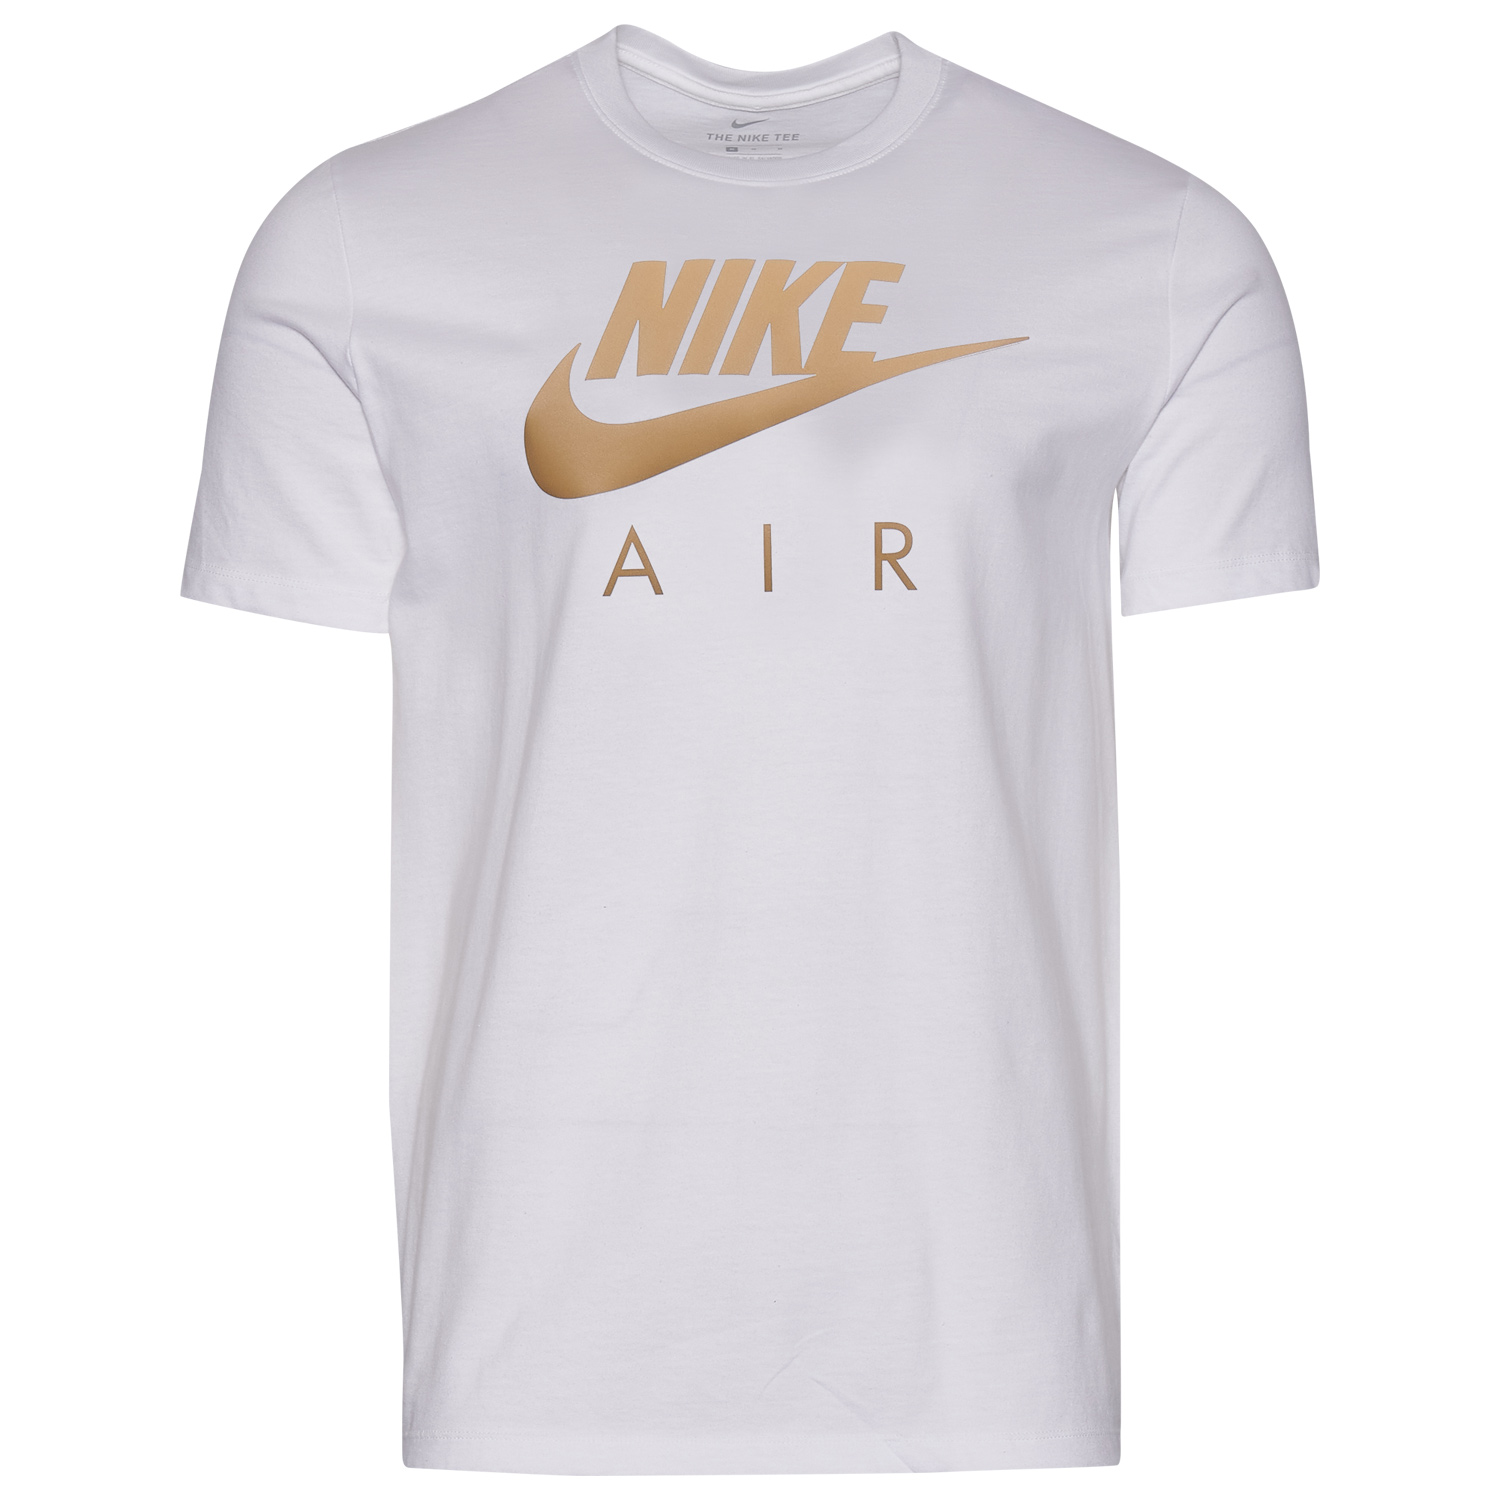 nike-air-reflective-t-shirt-white-gold